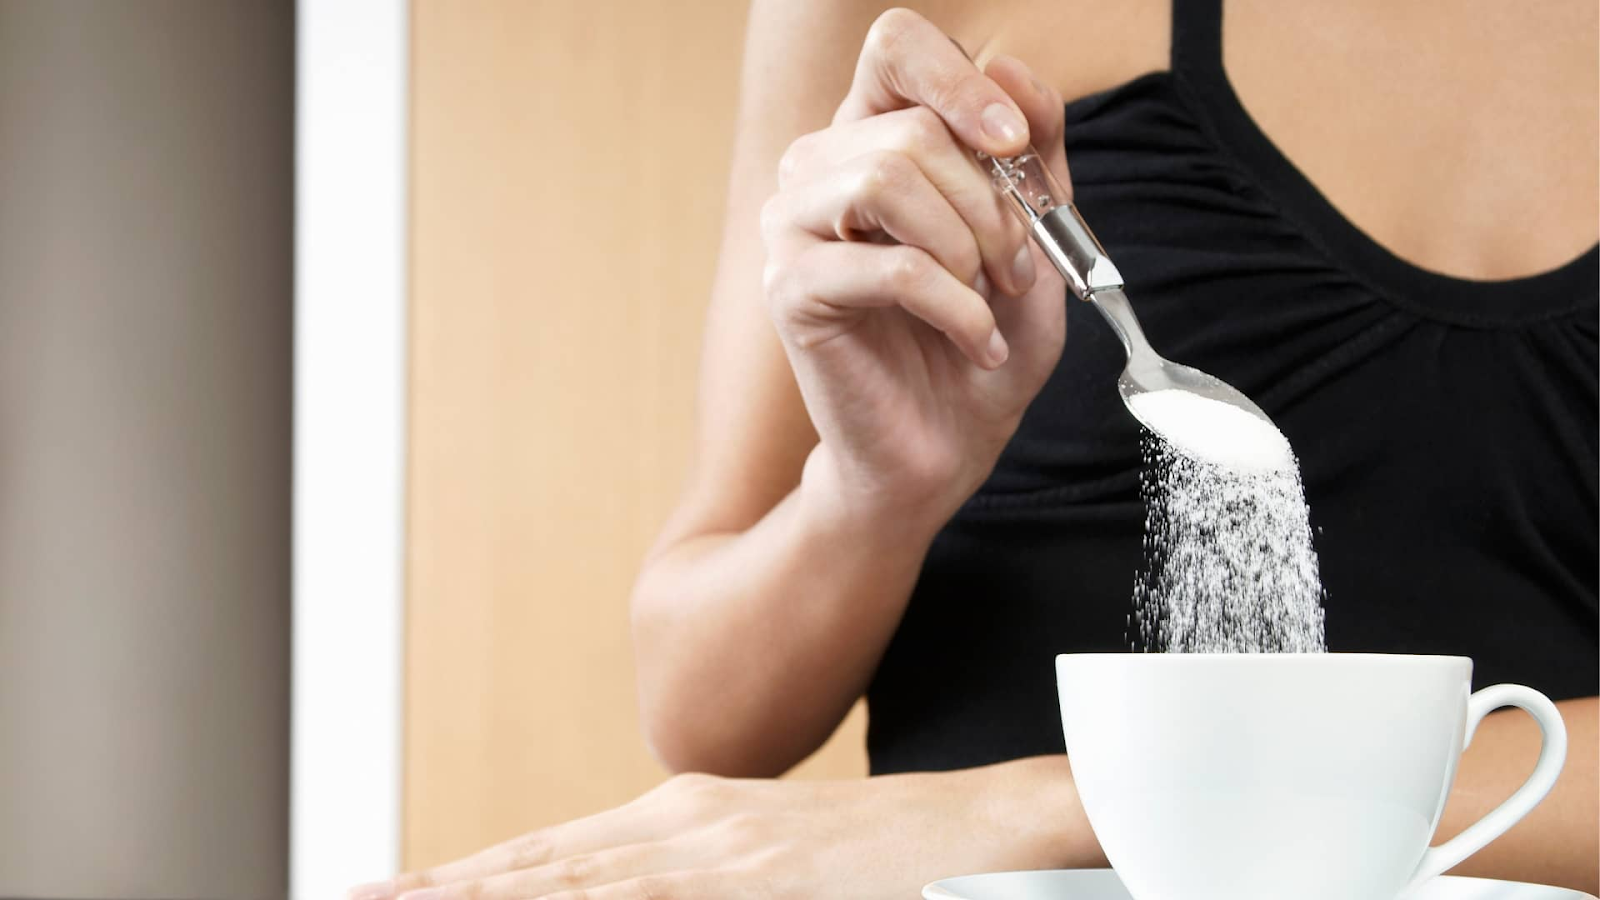 “Sugar with Your Skin”น้ำตาลทำร้ายผิวและร่างกายและอย่างไร?ทำไมมันจึงเป็นจุดเริ่มต้นของสุขภาพที่แย่และผิวไม่สดใส?1